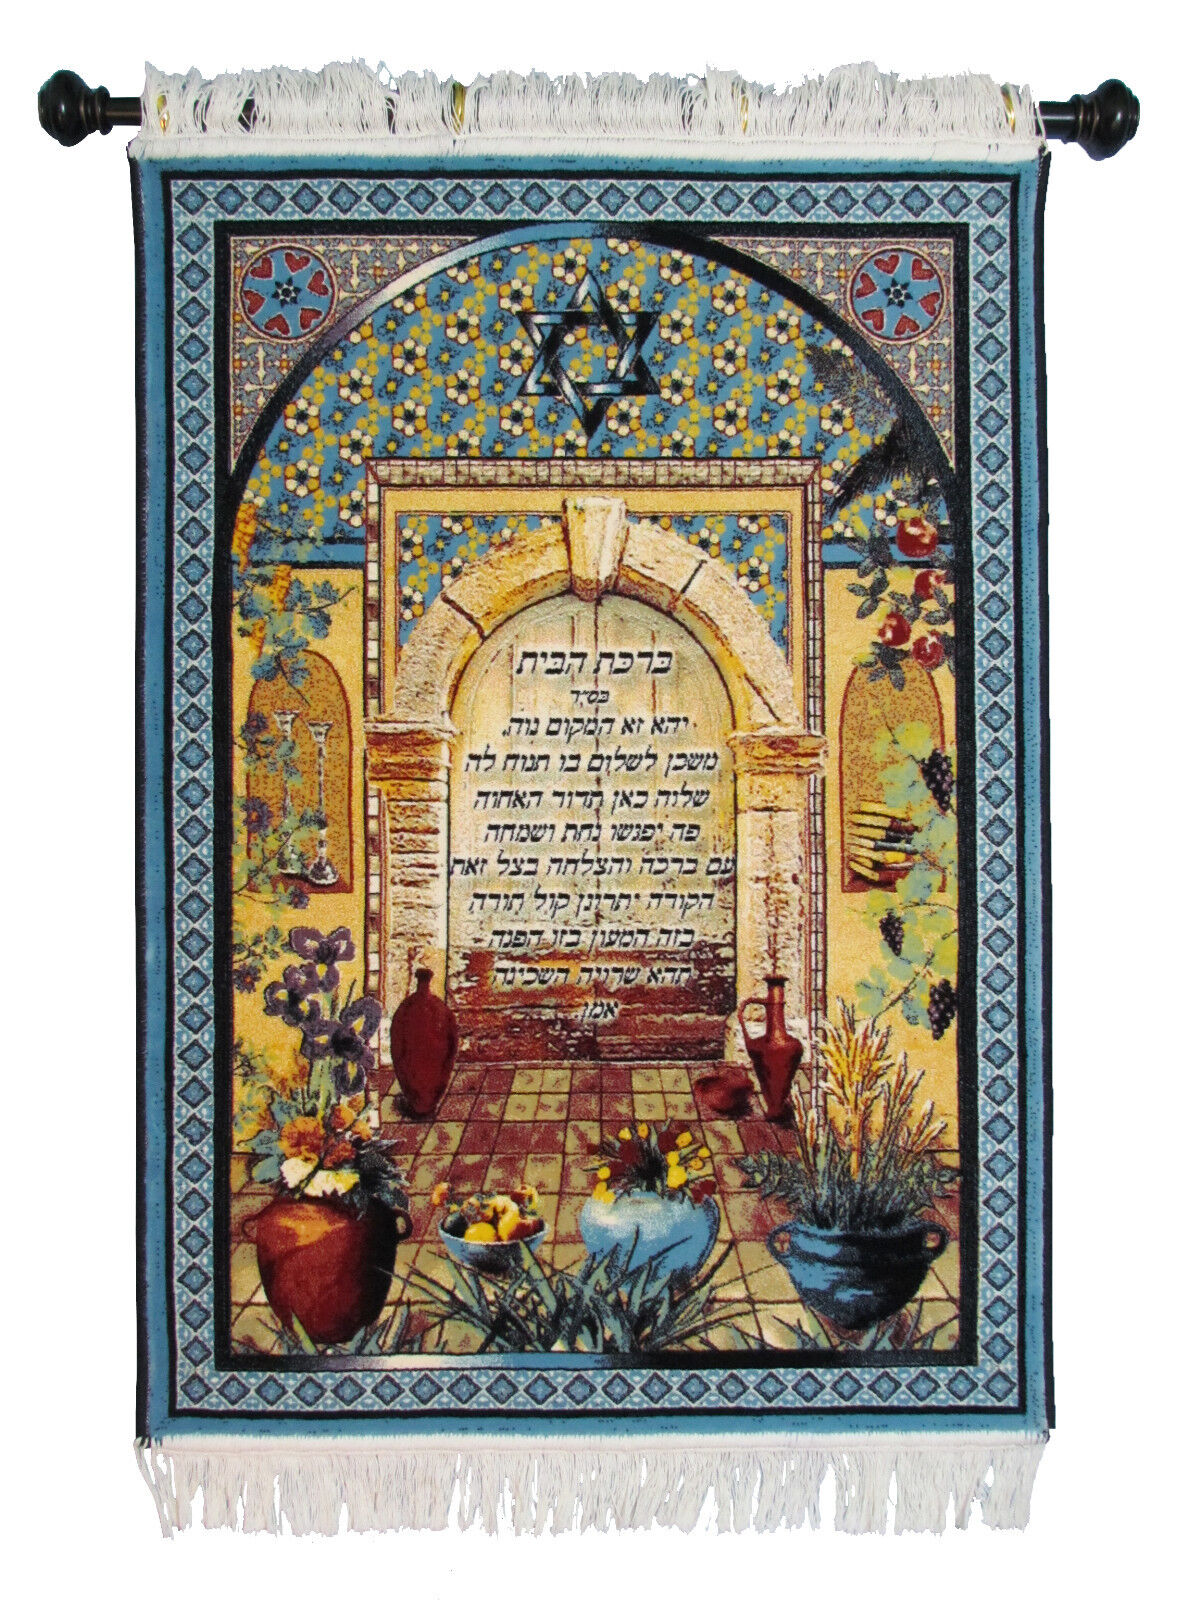 Decorative Persian Rug with Judaica ( Jewish ) Design Birkat Habayit   ברכת הבית